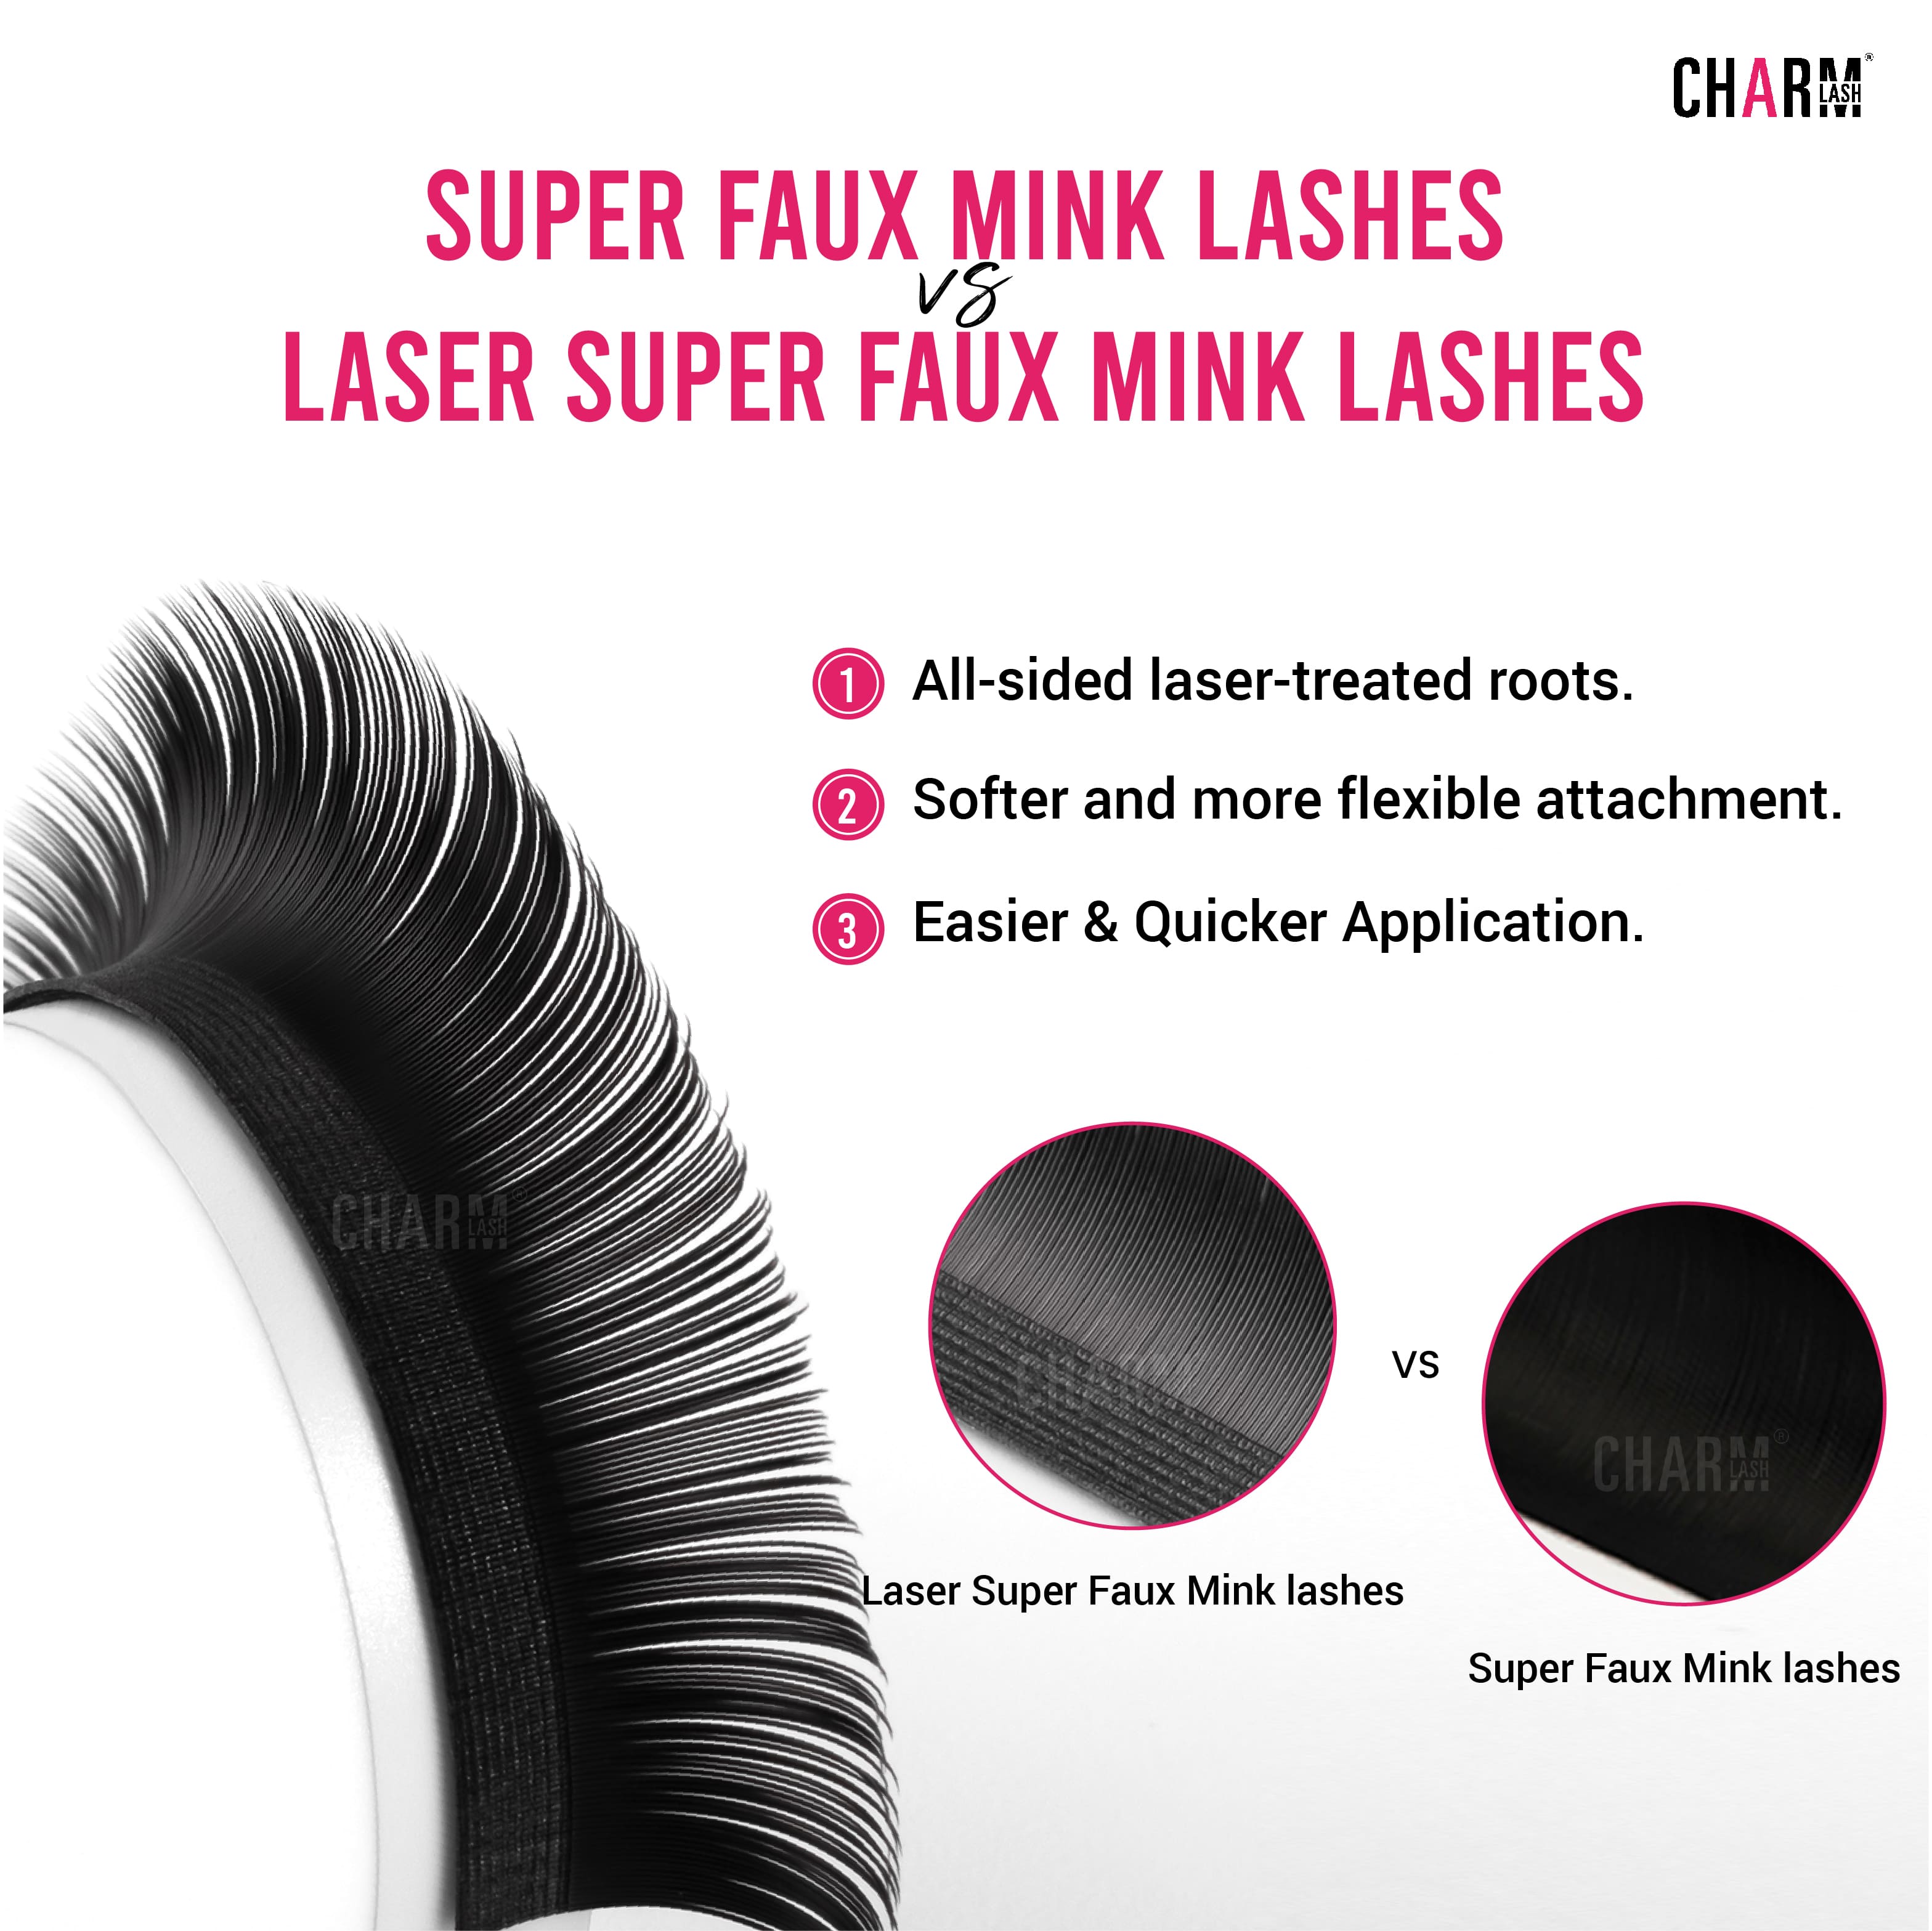 Super Faux Mink and Laser Super Faux Mink Lashes - Charmlash